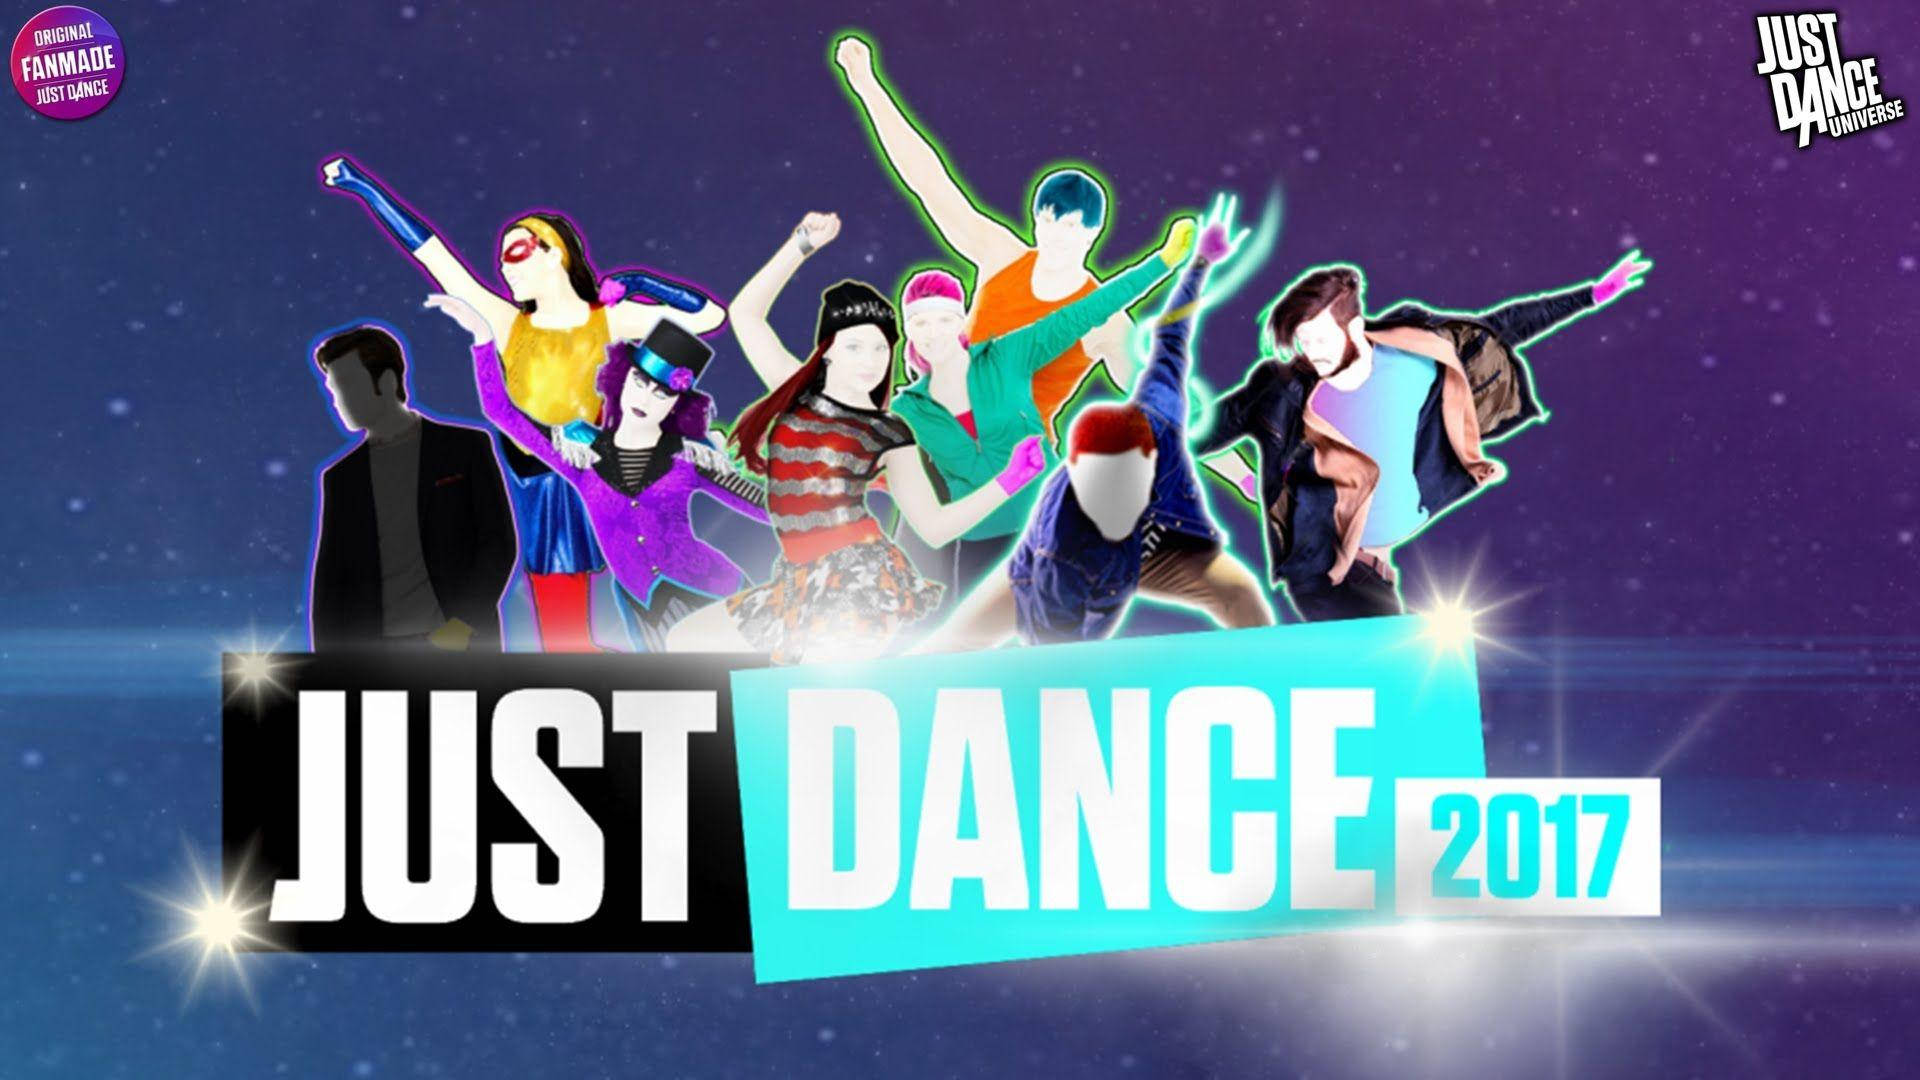 Just Dance 2017 Poster Wallpaper